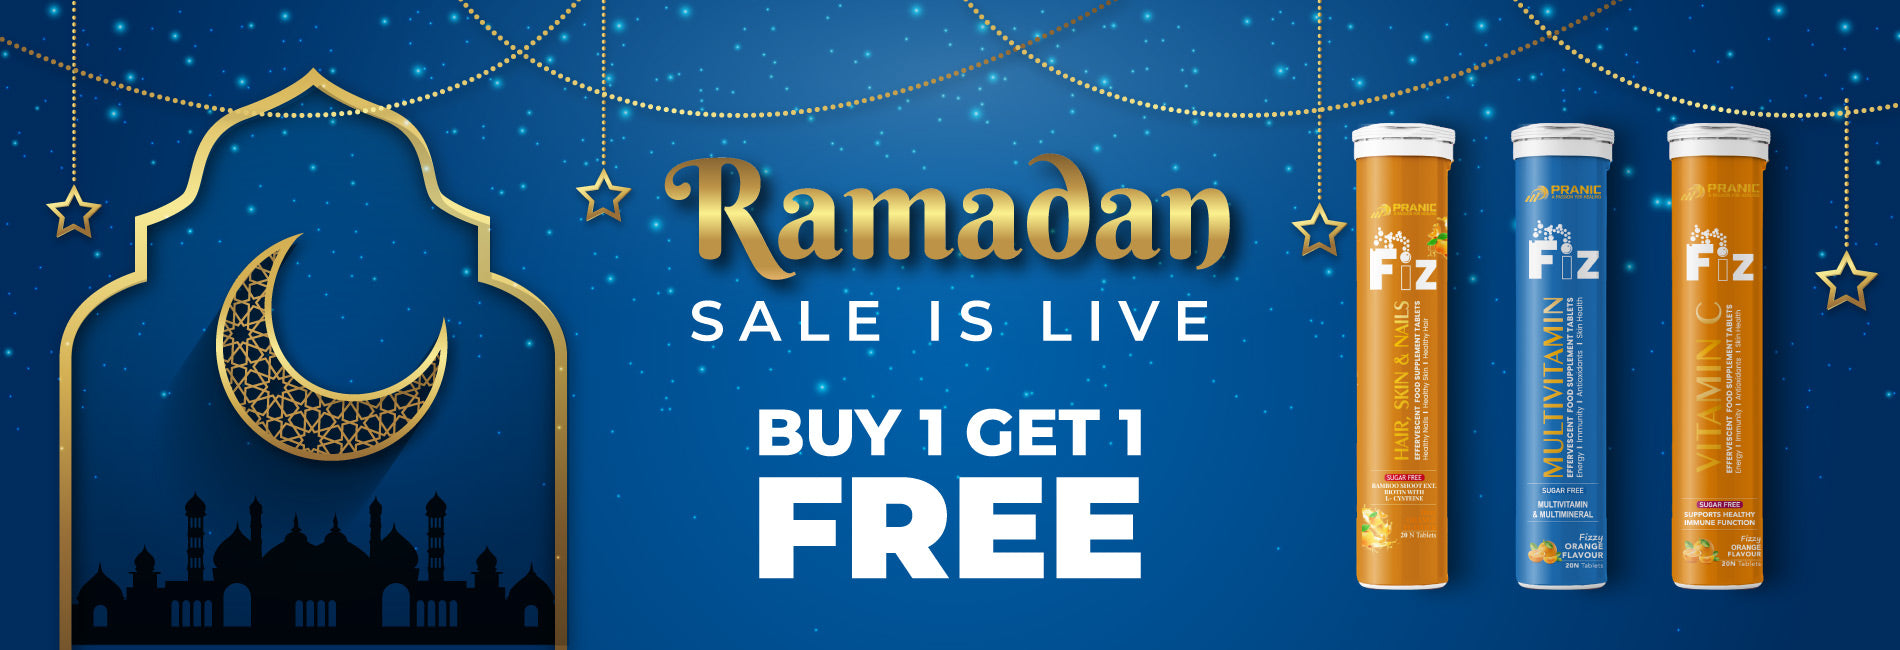 Ramzan Sale is Live Buy 1 Get 1 Free Web